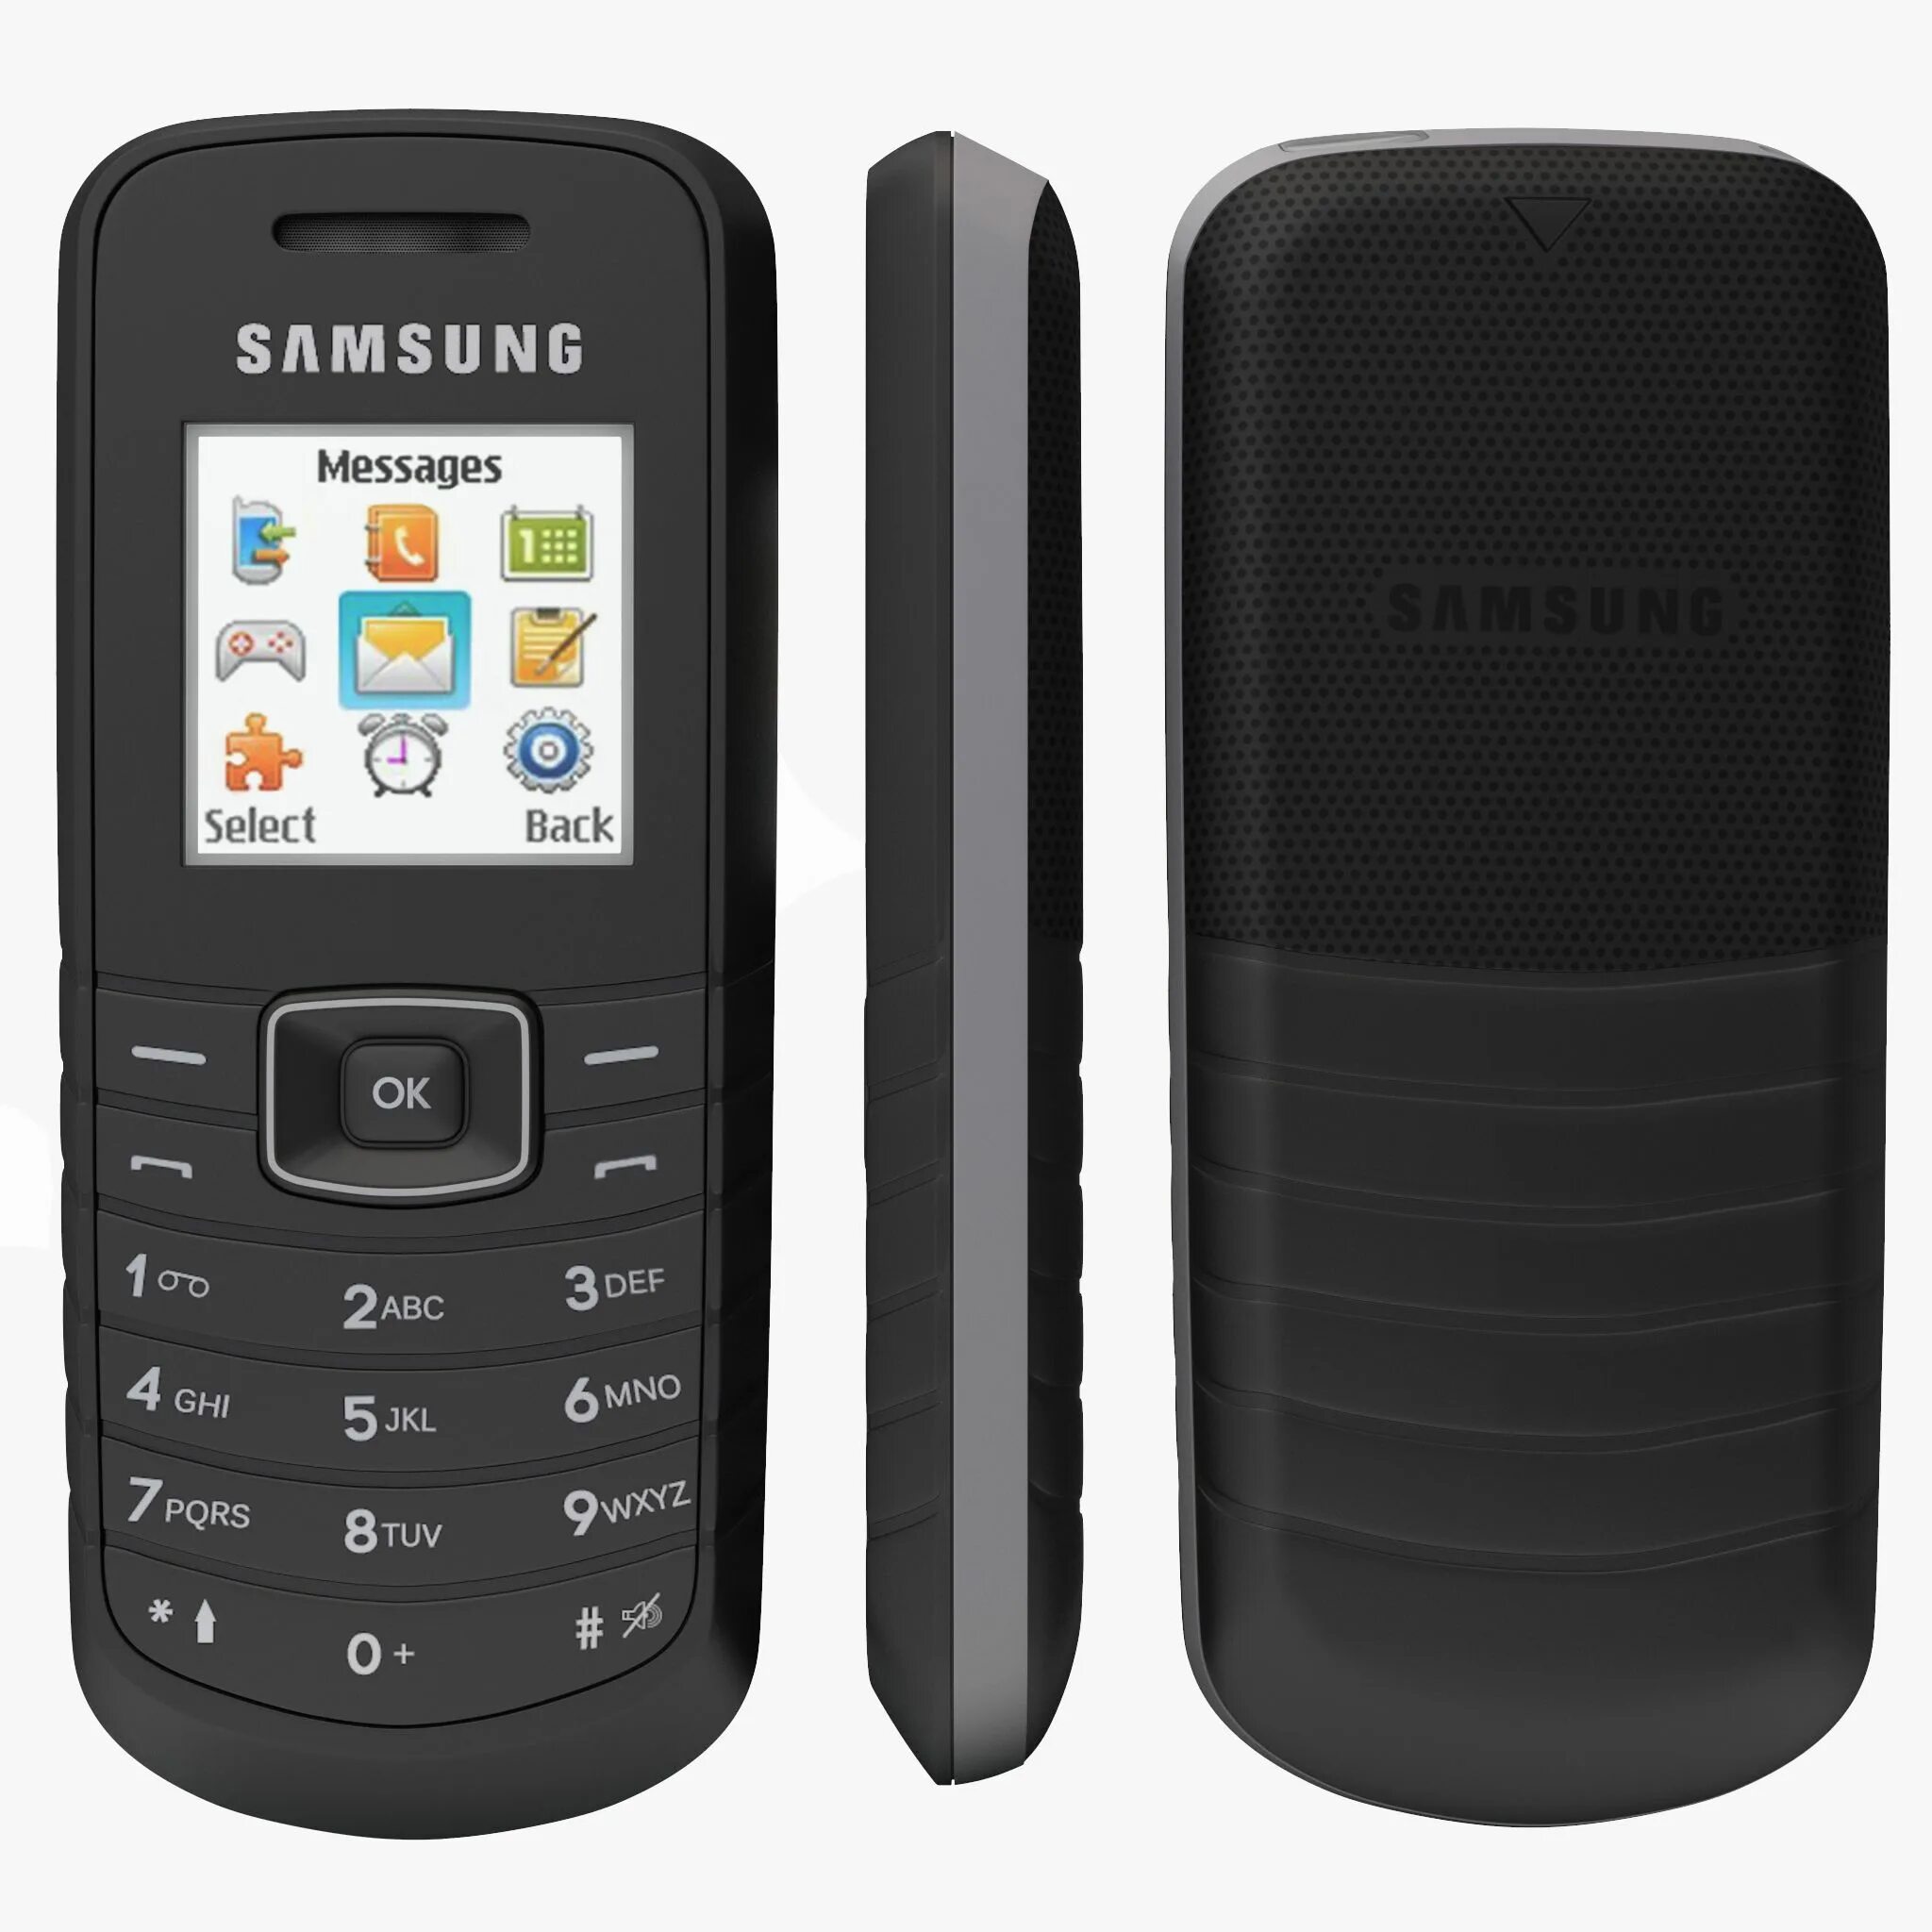 Самсунг е 3. Самсунг e1080. Samsung gt-e1050. Сотовый телефон Samsung gt-e1080. Самсунг gt-e1150.